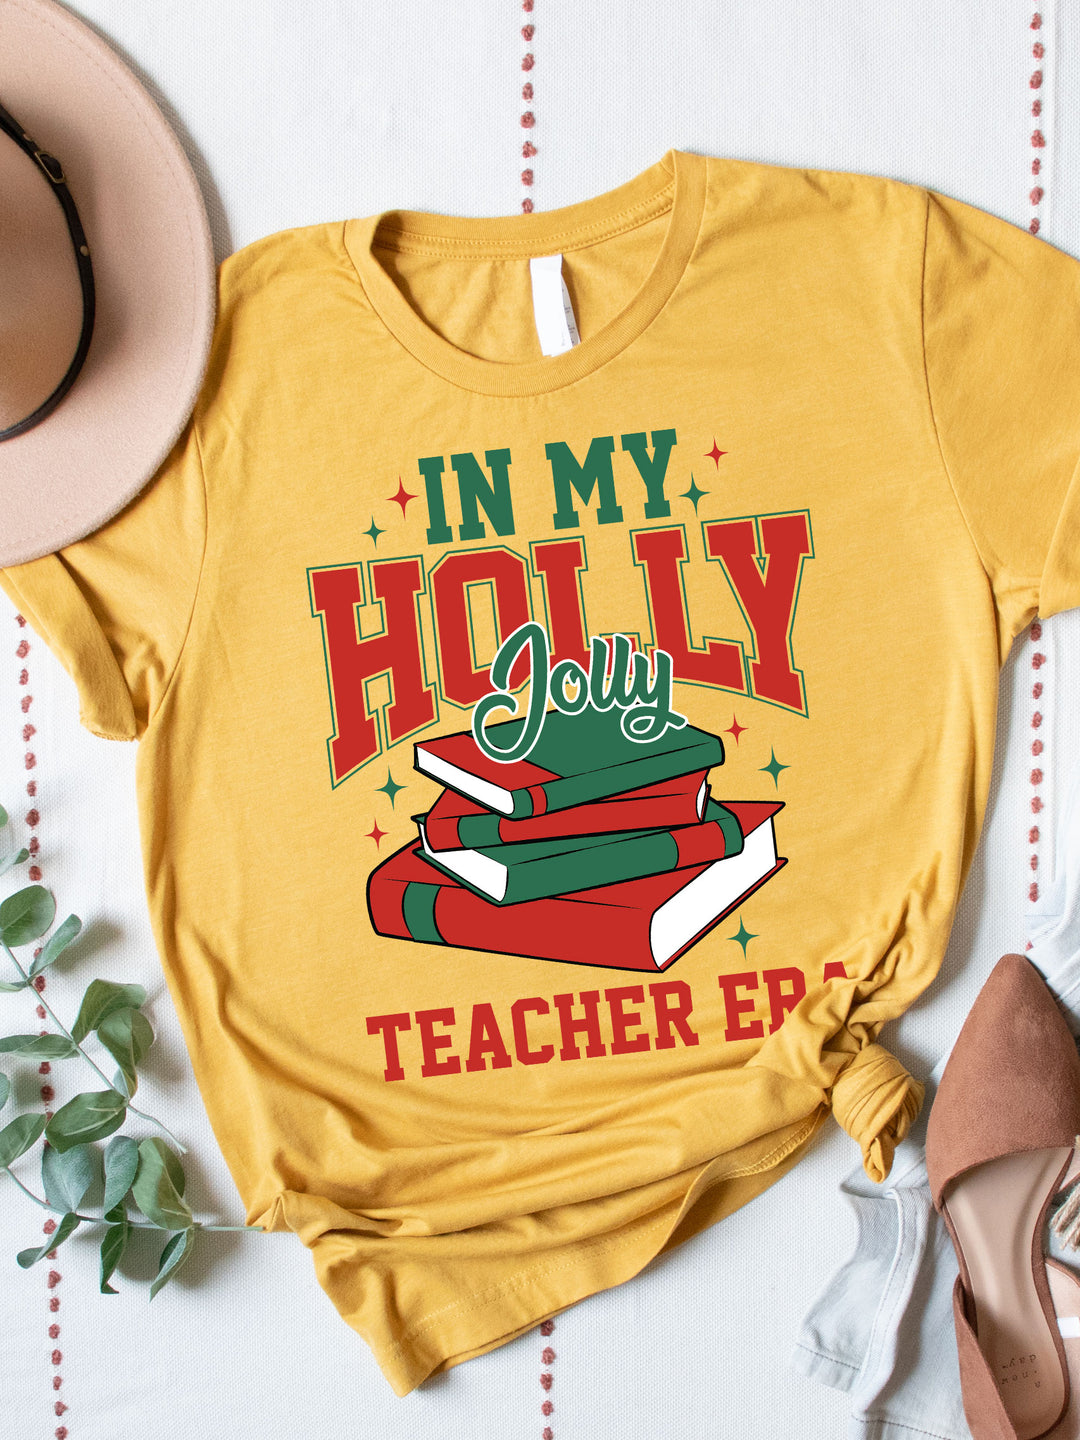 In my Holly Jolly Teacher Era Graphic Tee